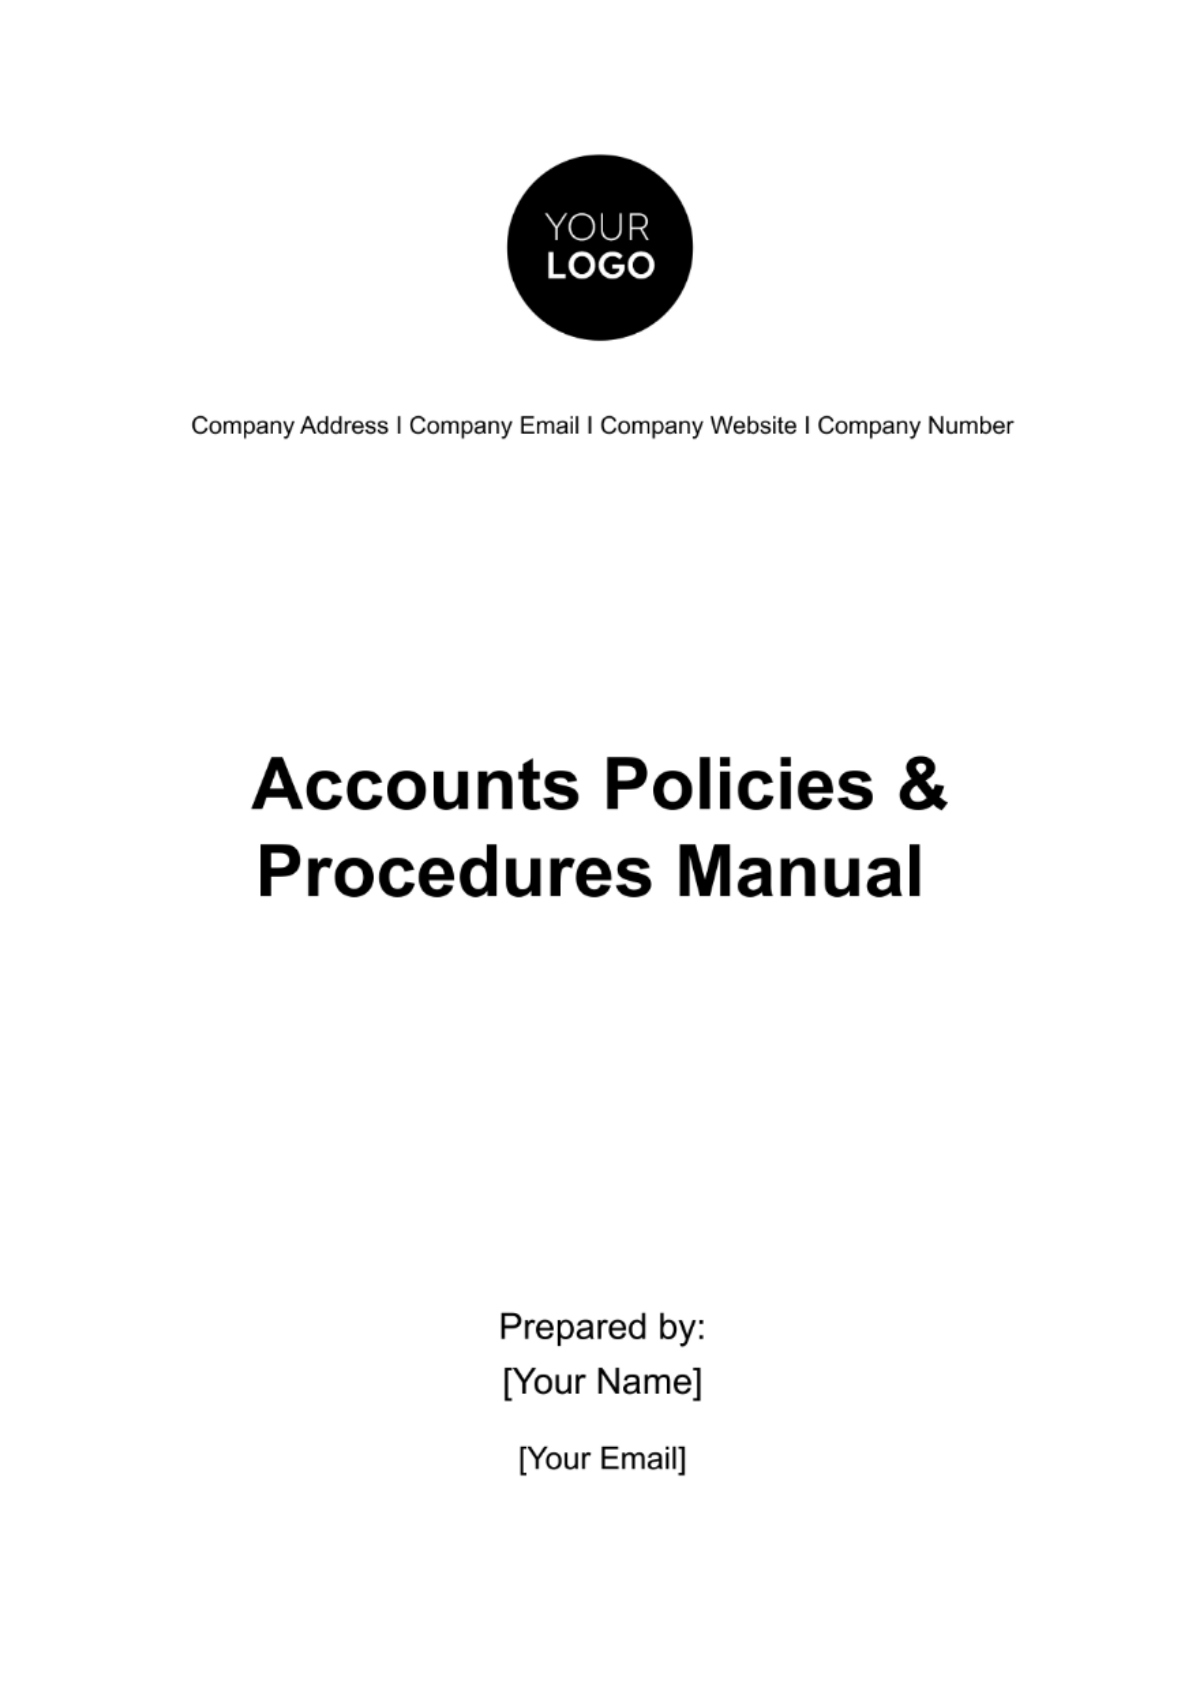 Accounts Policies & Procedures Manual Template